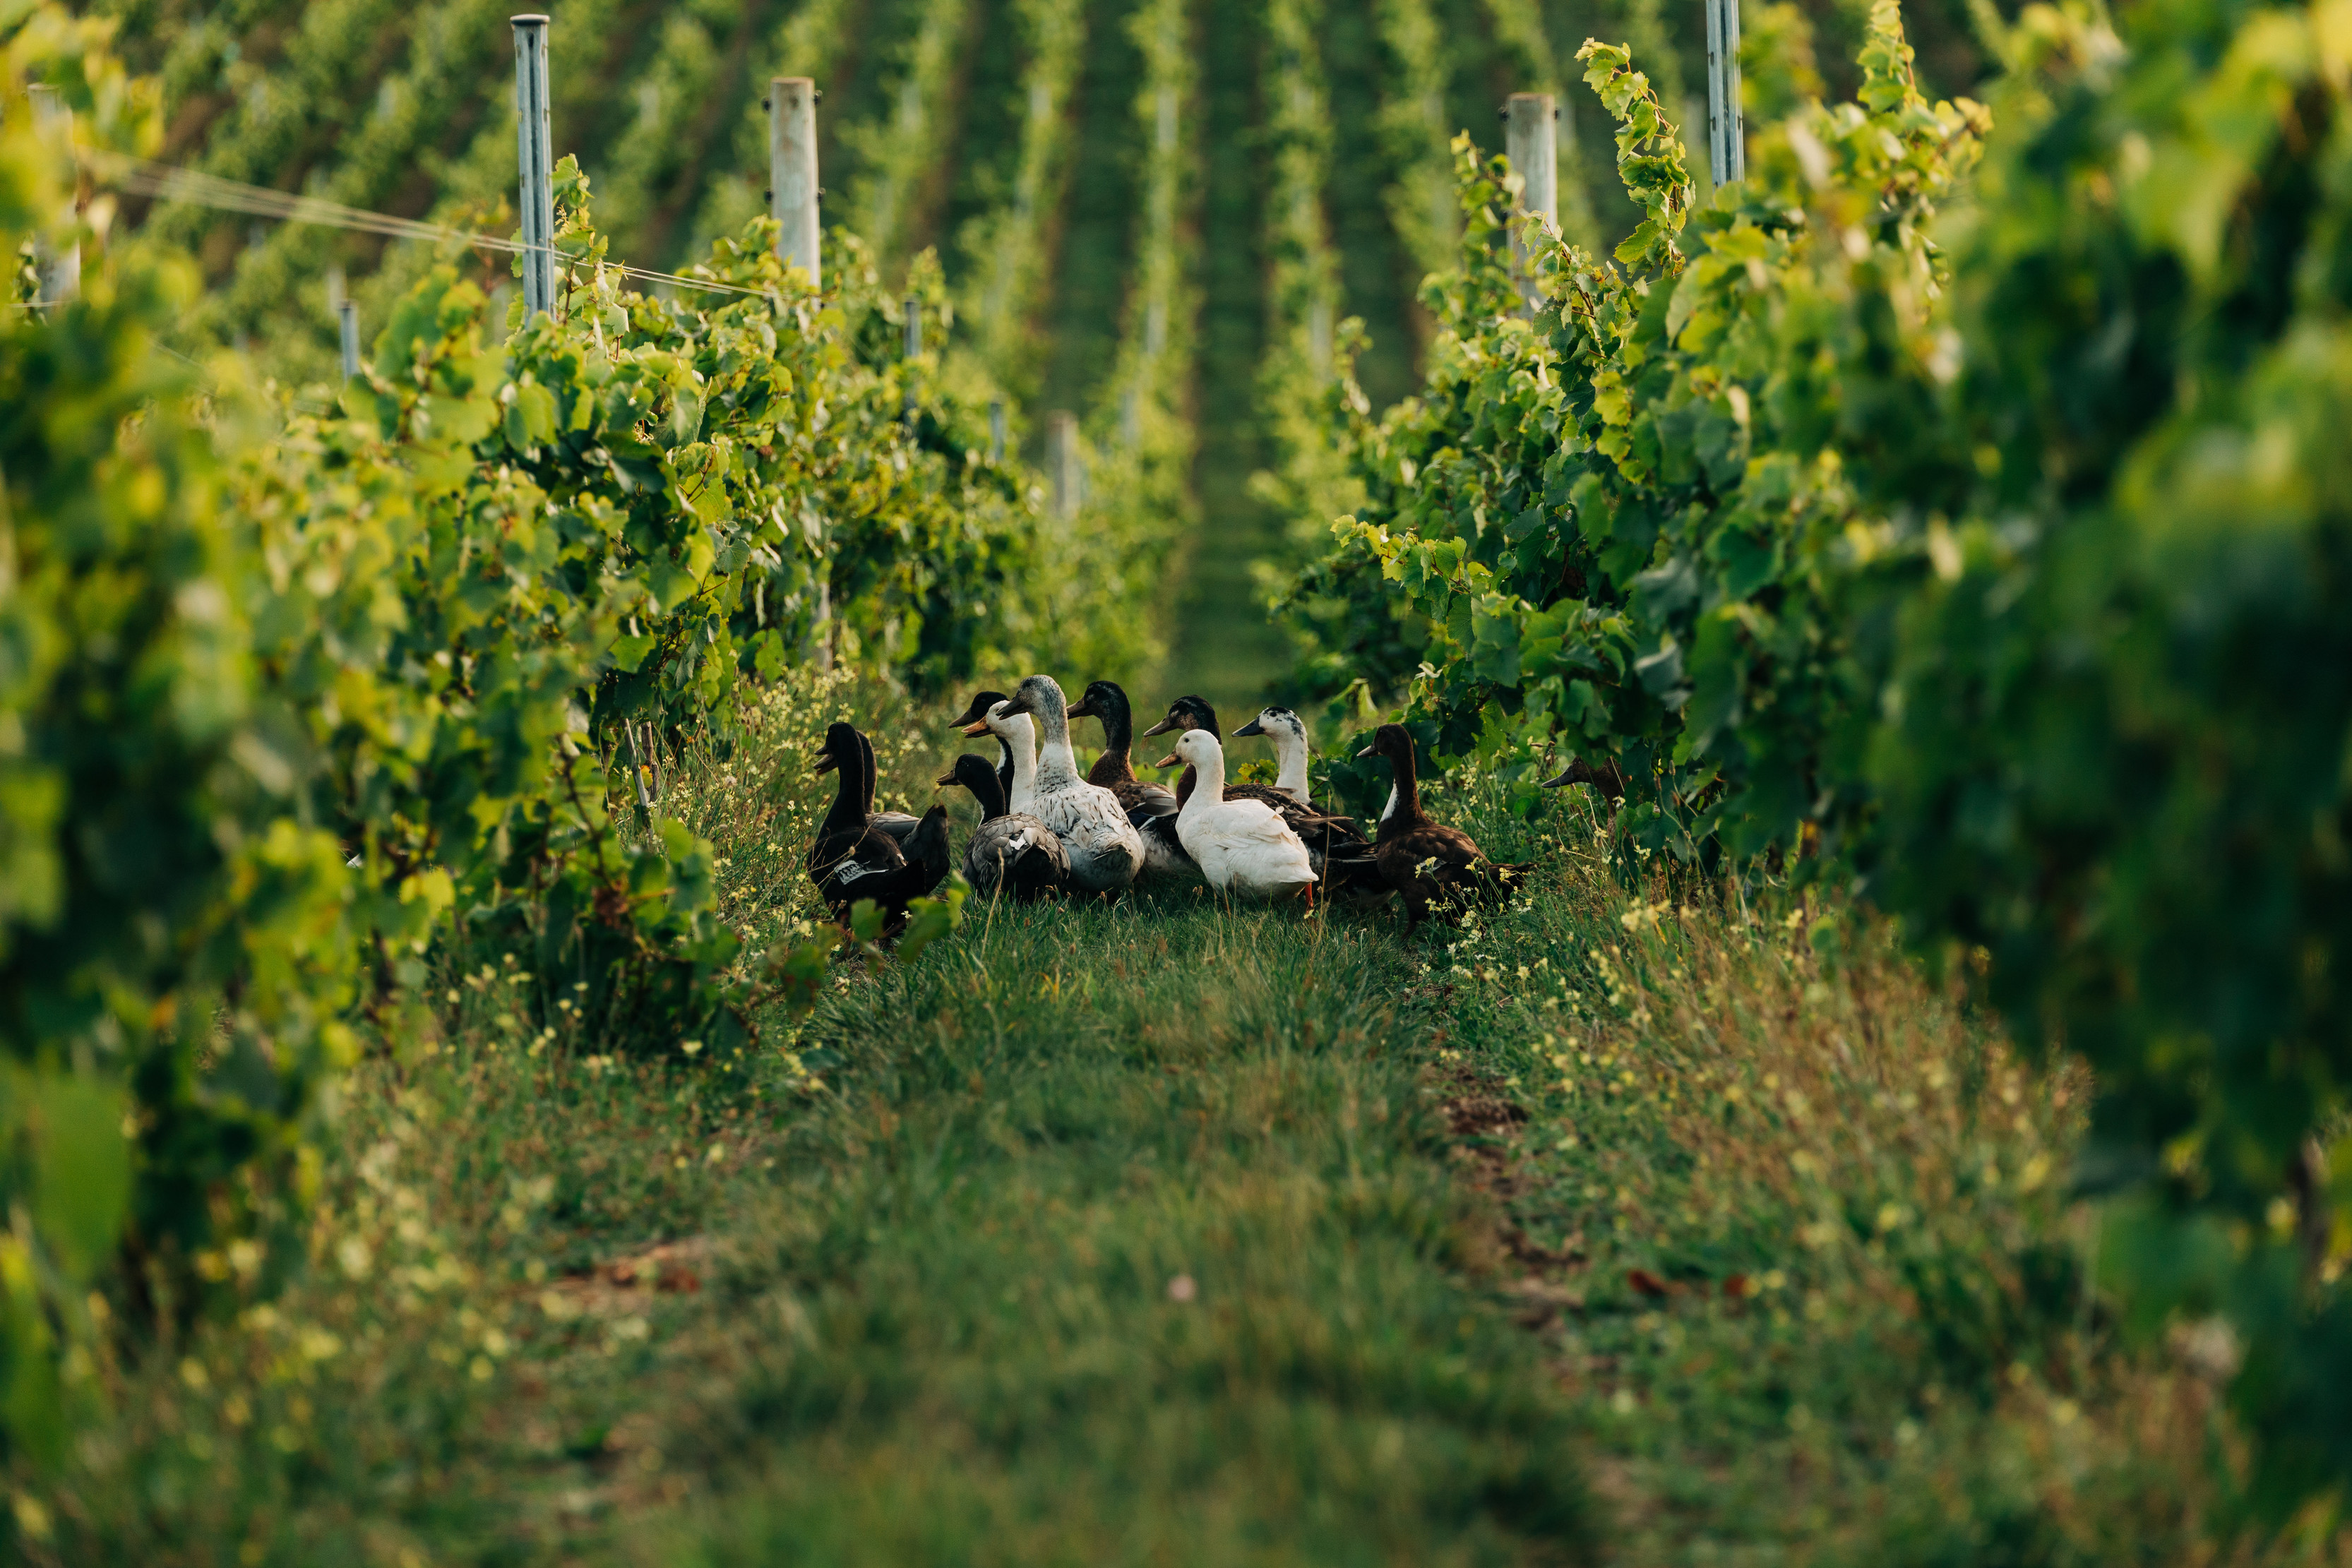 A herd of ducks cross through the vineyards at Delamere Vineyards.